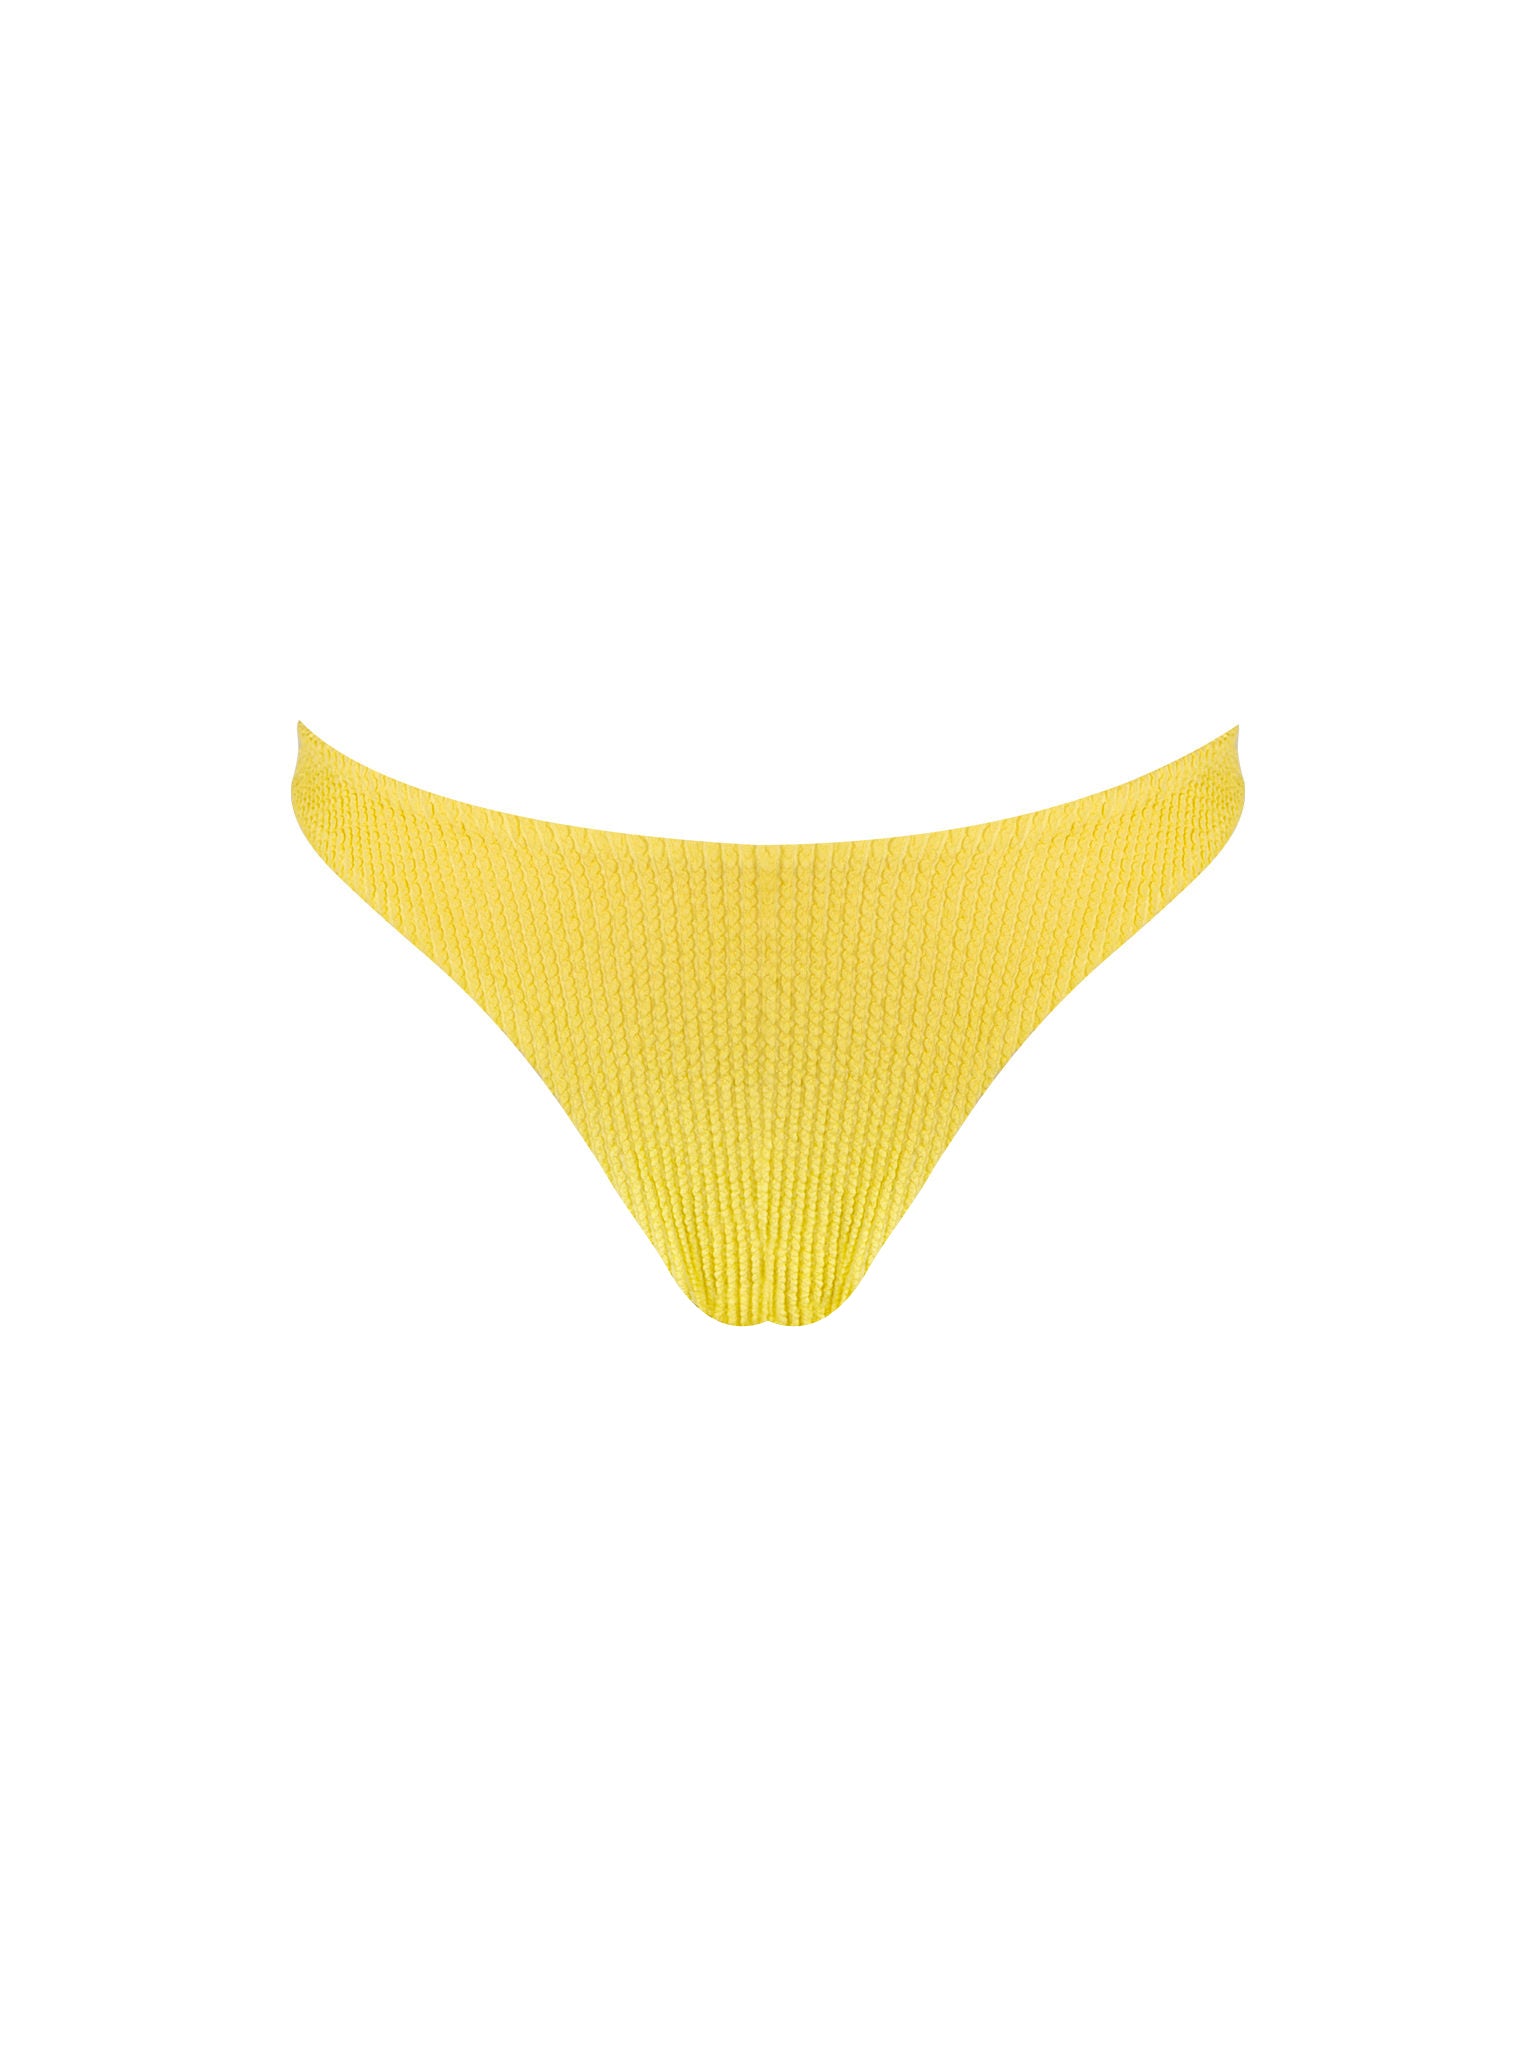 Hipster Bikini Bottom - Yellow